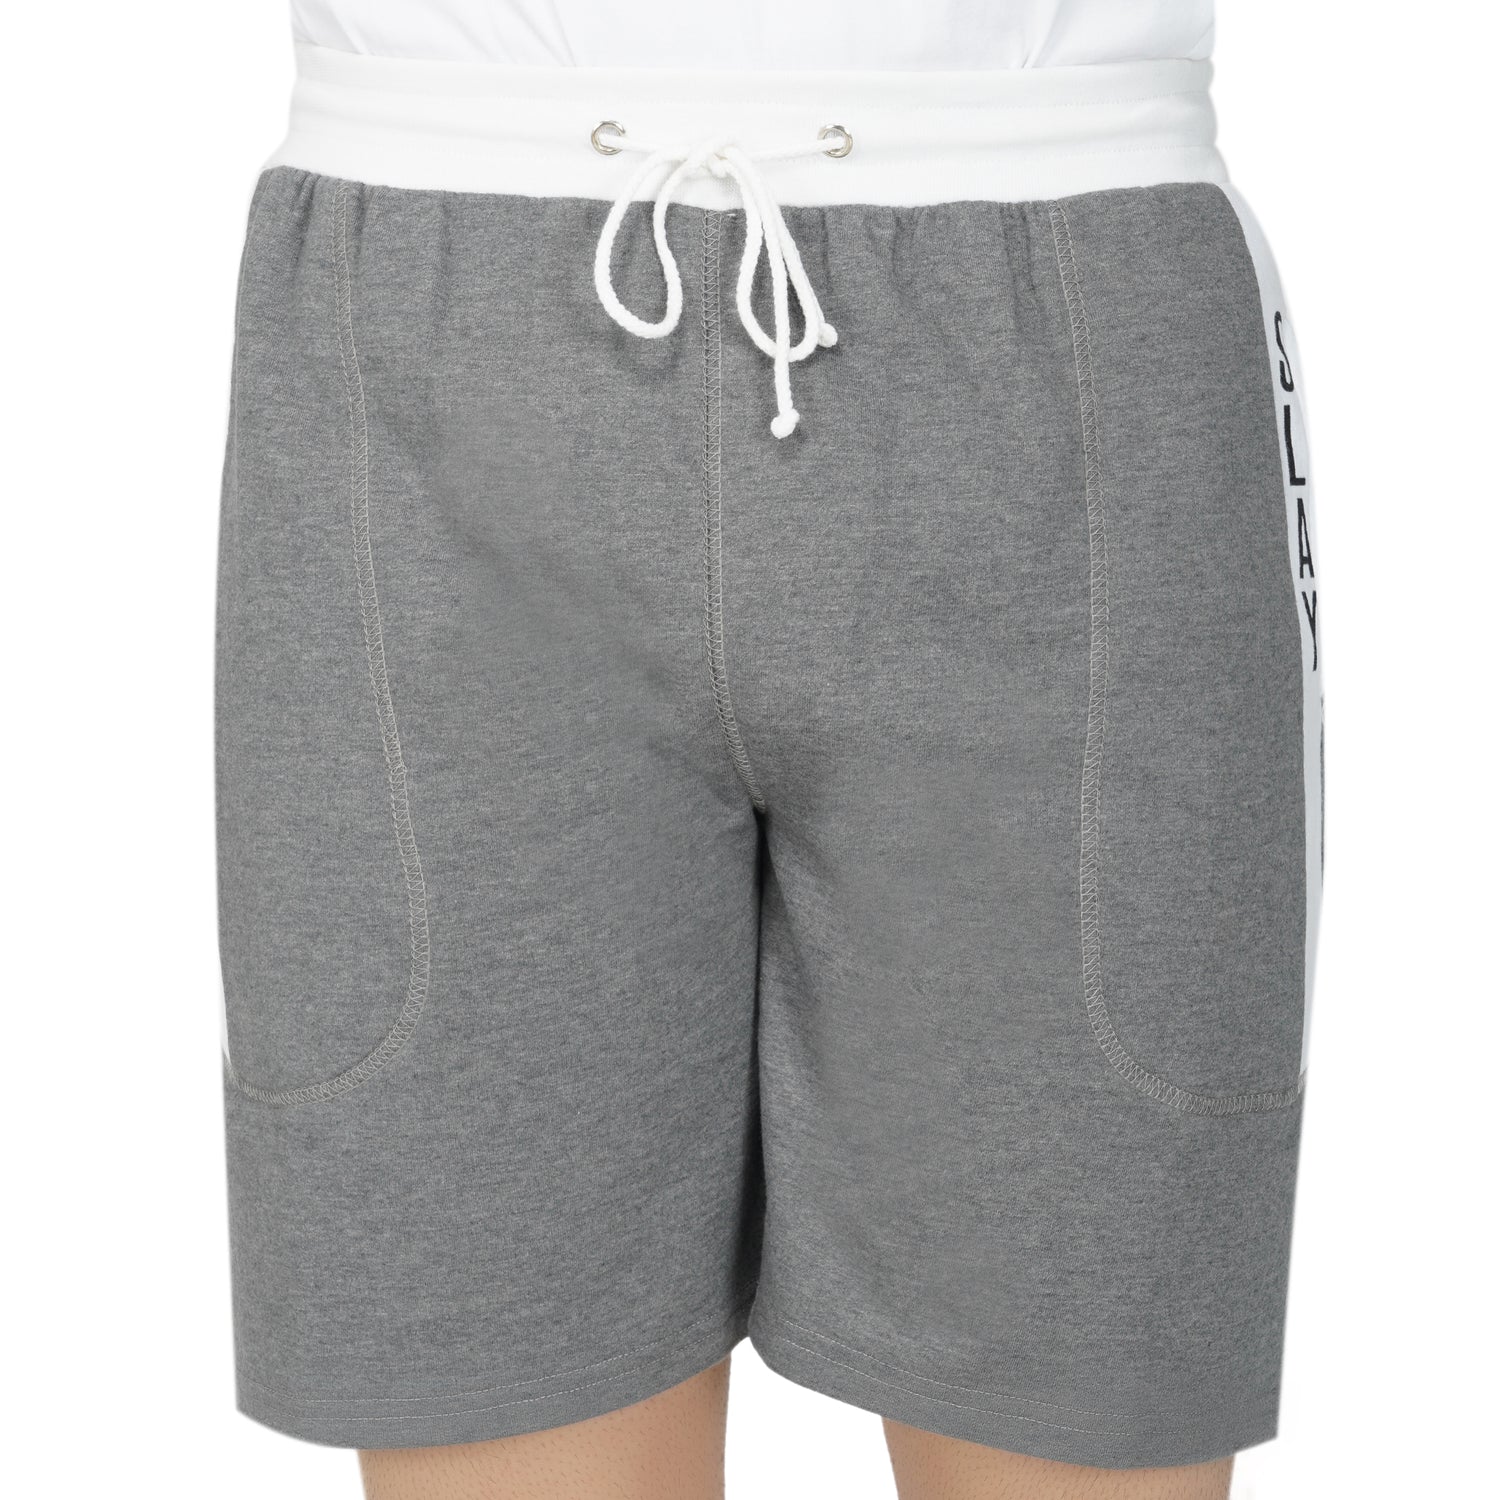 SLAY. Men's Light Grey Shorts with White Stripes-clothing-to-slay.myshopify.com-Men's Shorts